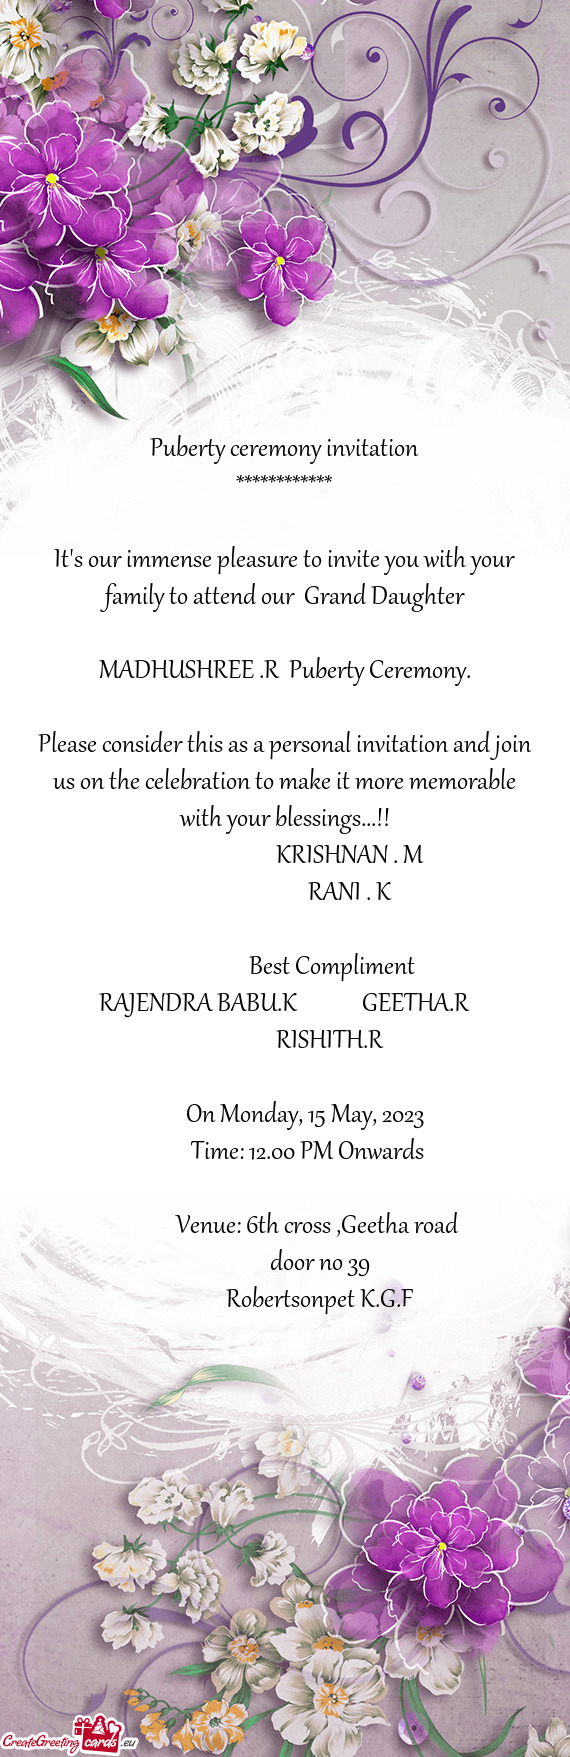 MADHUSHREE .R Puberty Ceremony